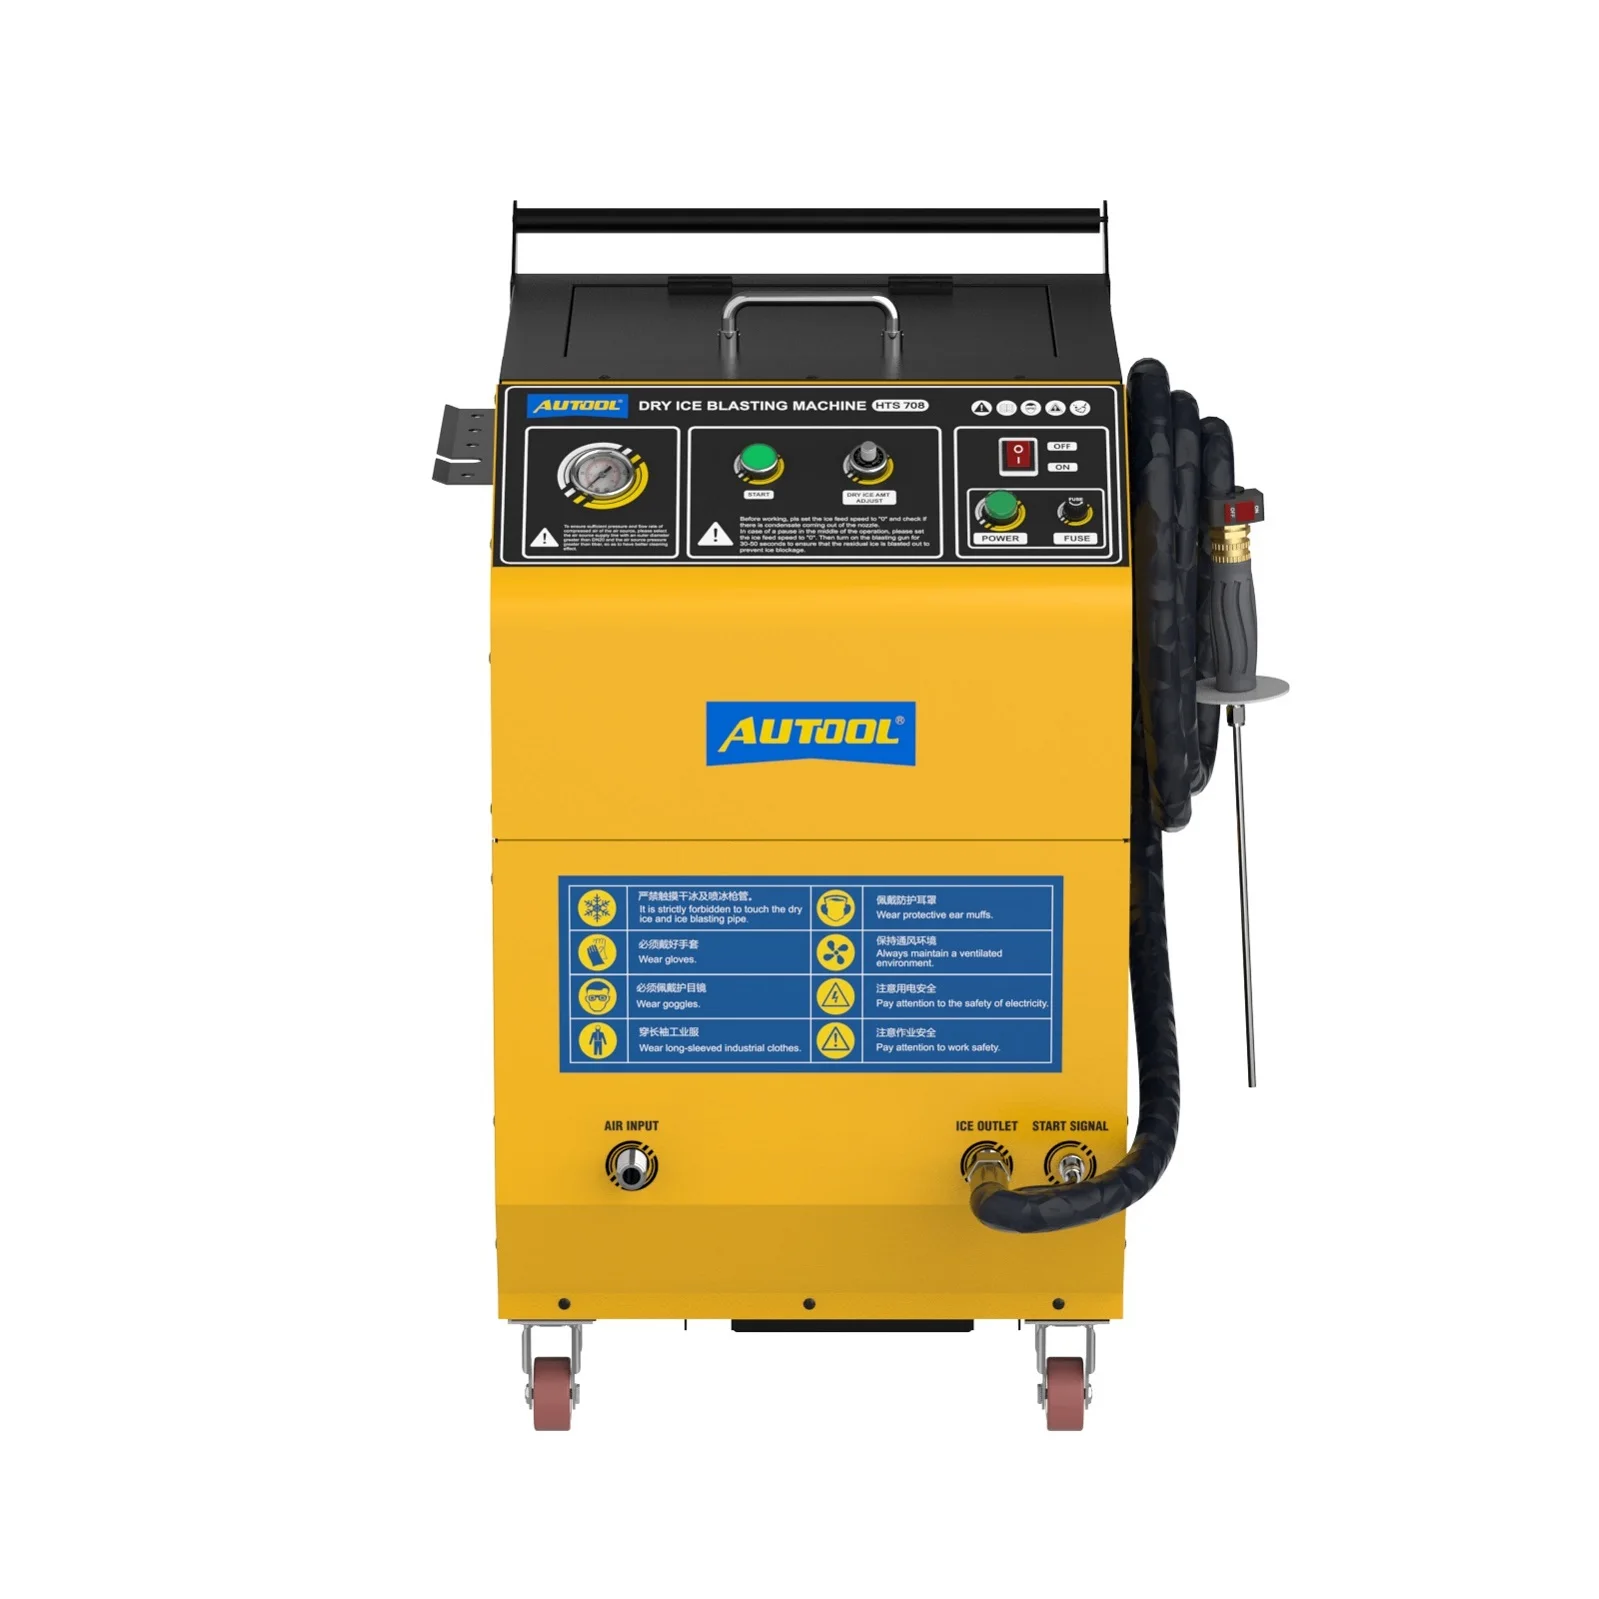 Autool Hts705 Dry Ice Blasting Clean Machine 110v/220v Industrial